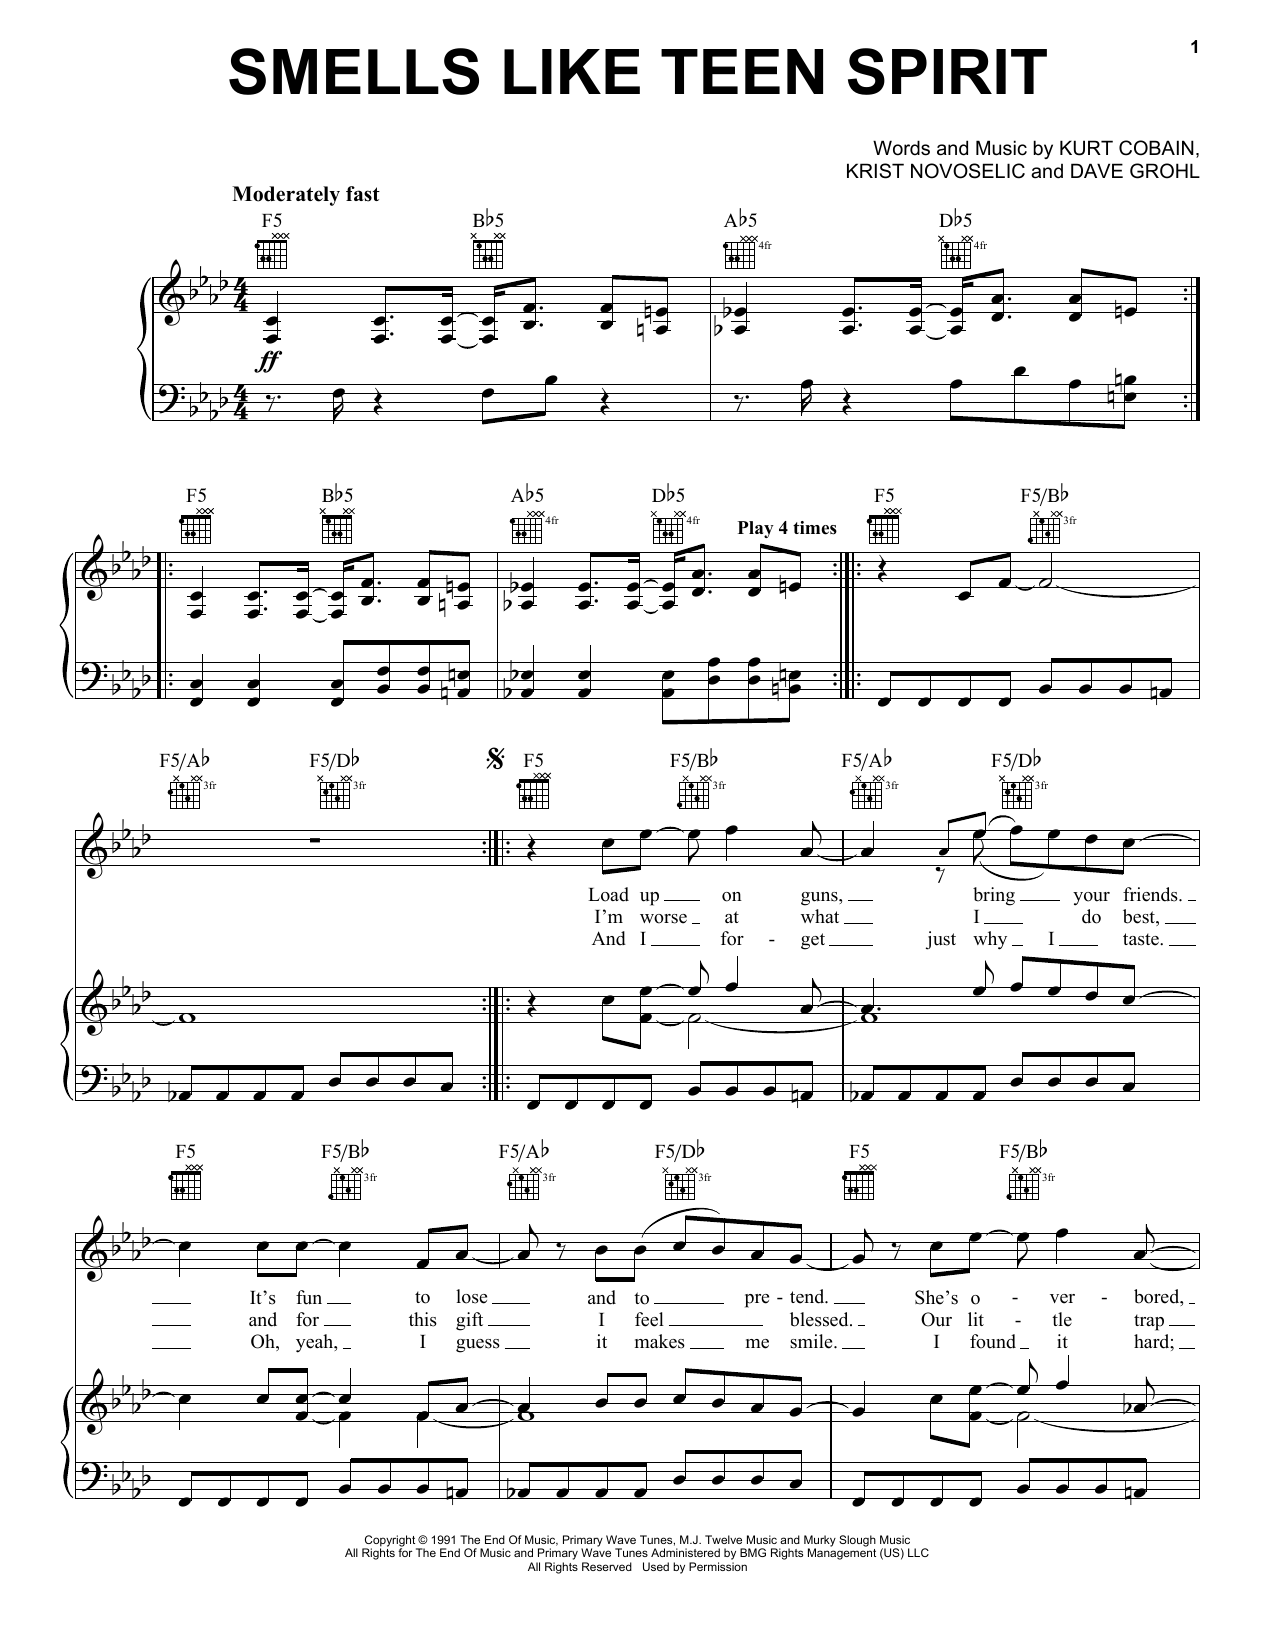 Nirvana Smells Like Teen Spirit Sheet Music Notes & Chords for Trumpet - Download or Print PDF